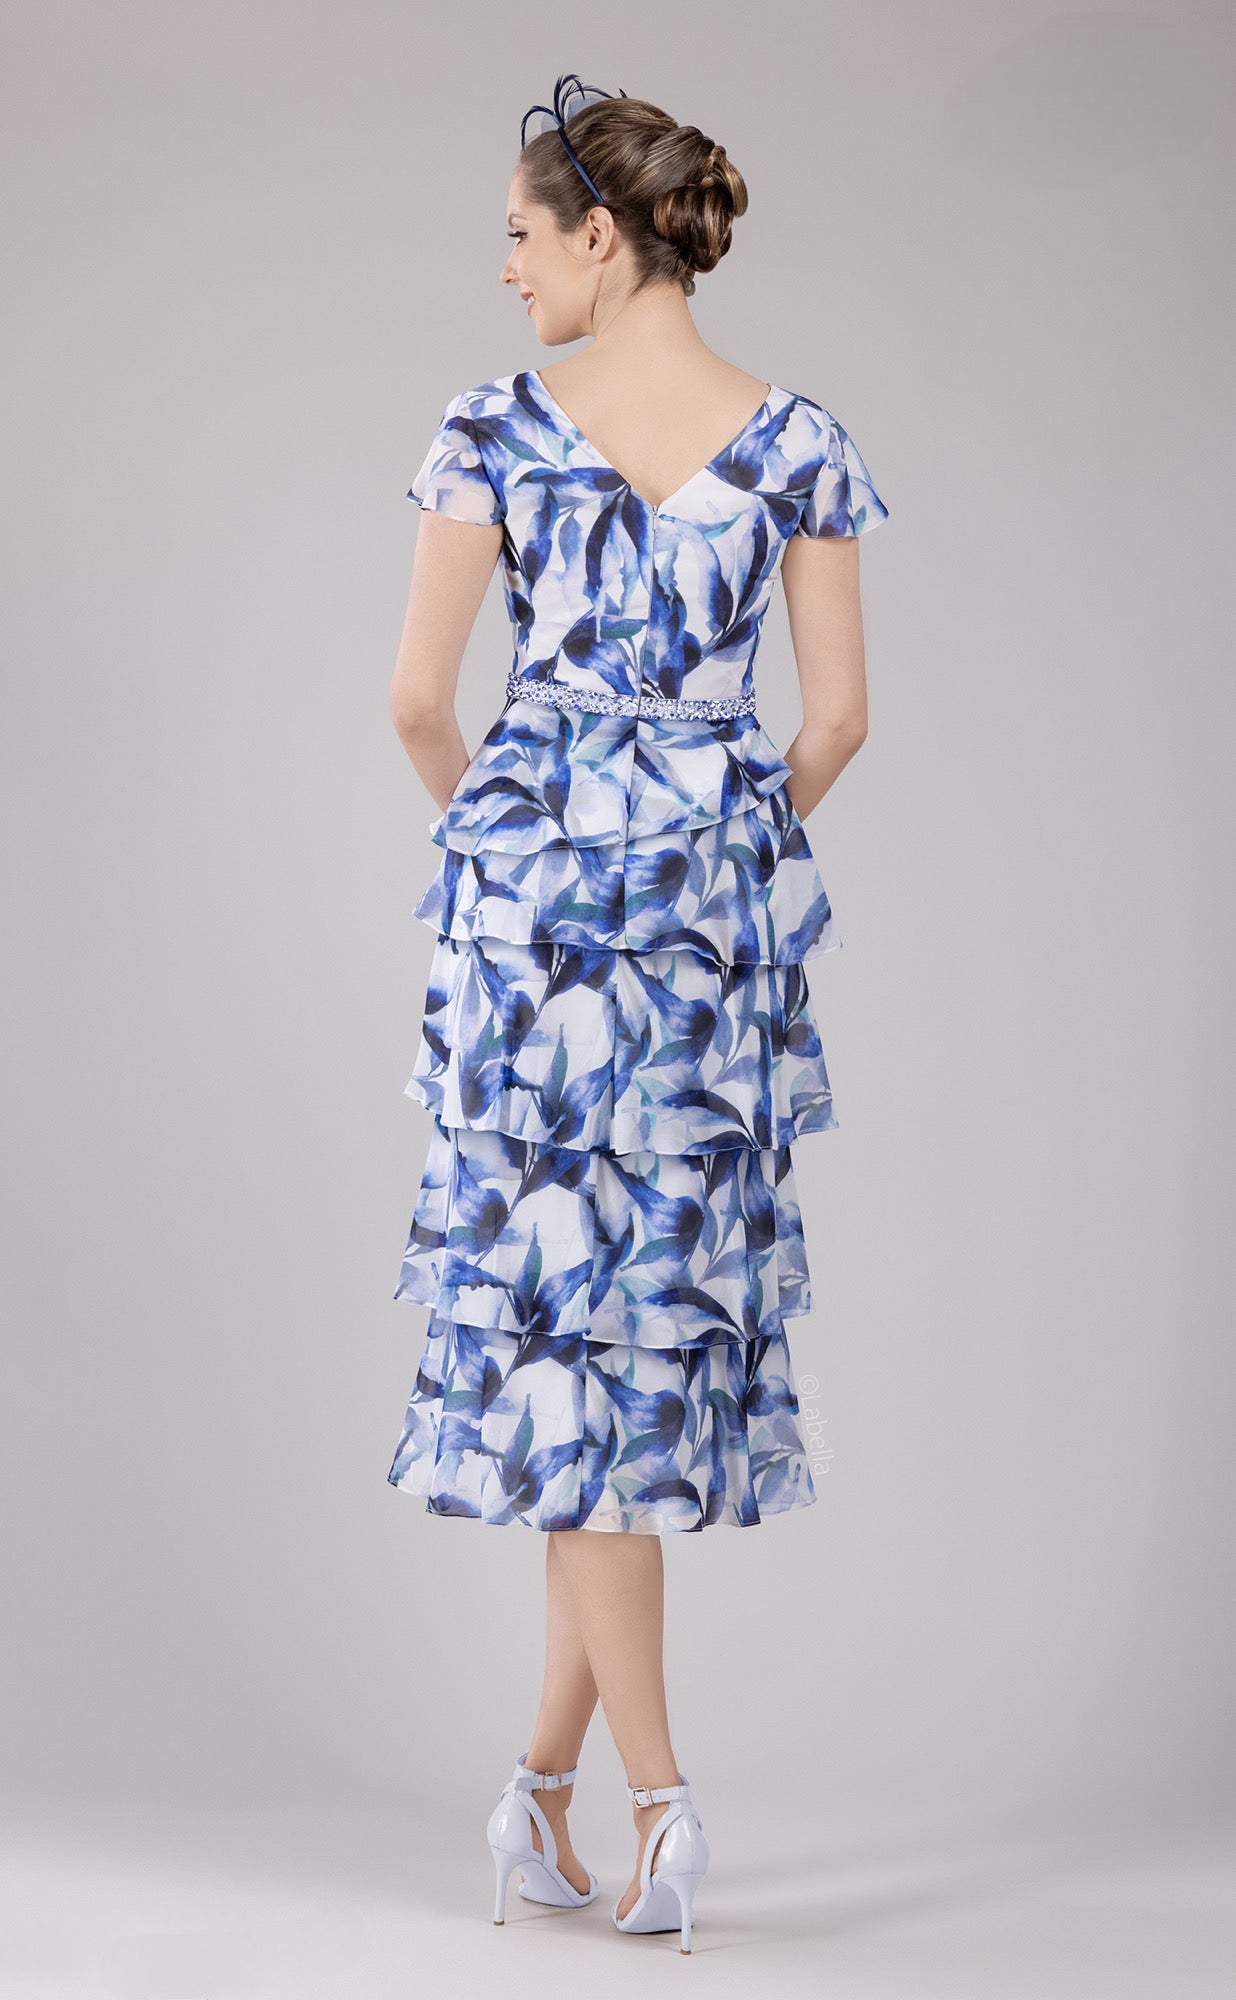 2 Piece Dress with Royal Blue Print and Bolero Style Jacket